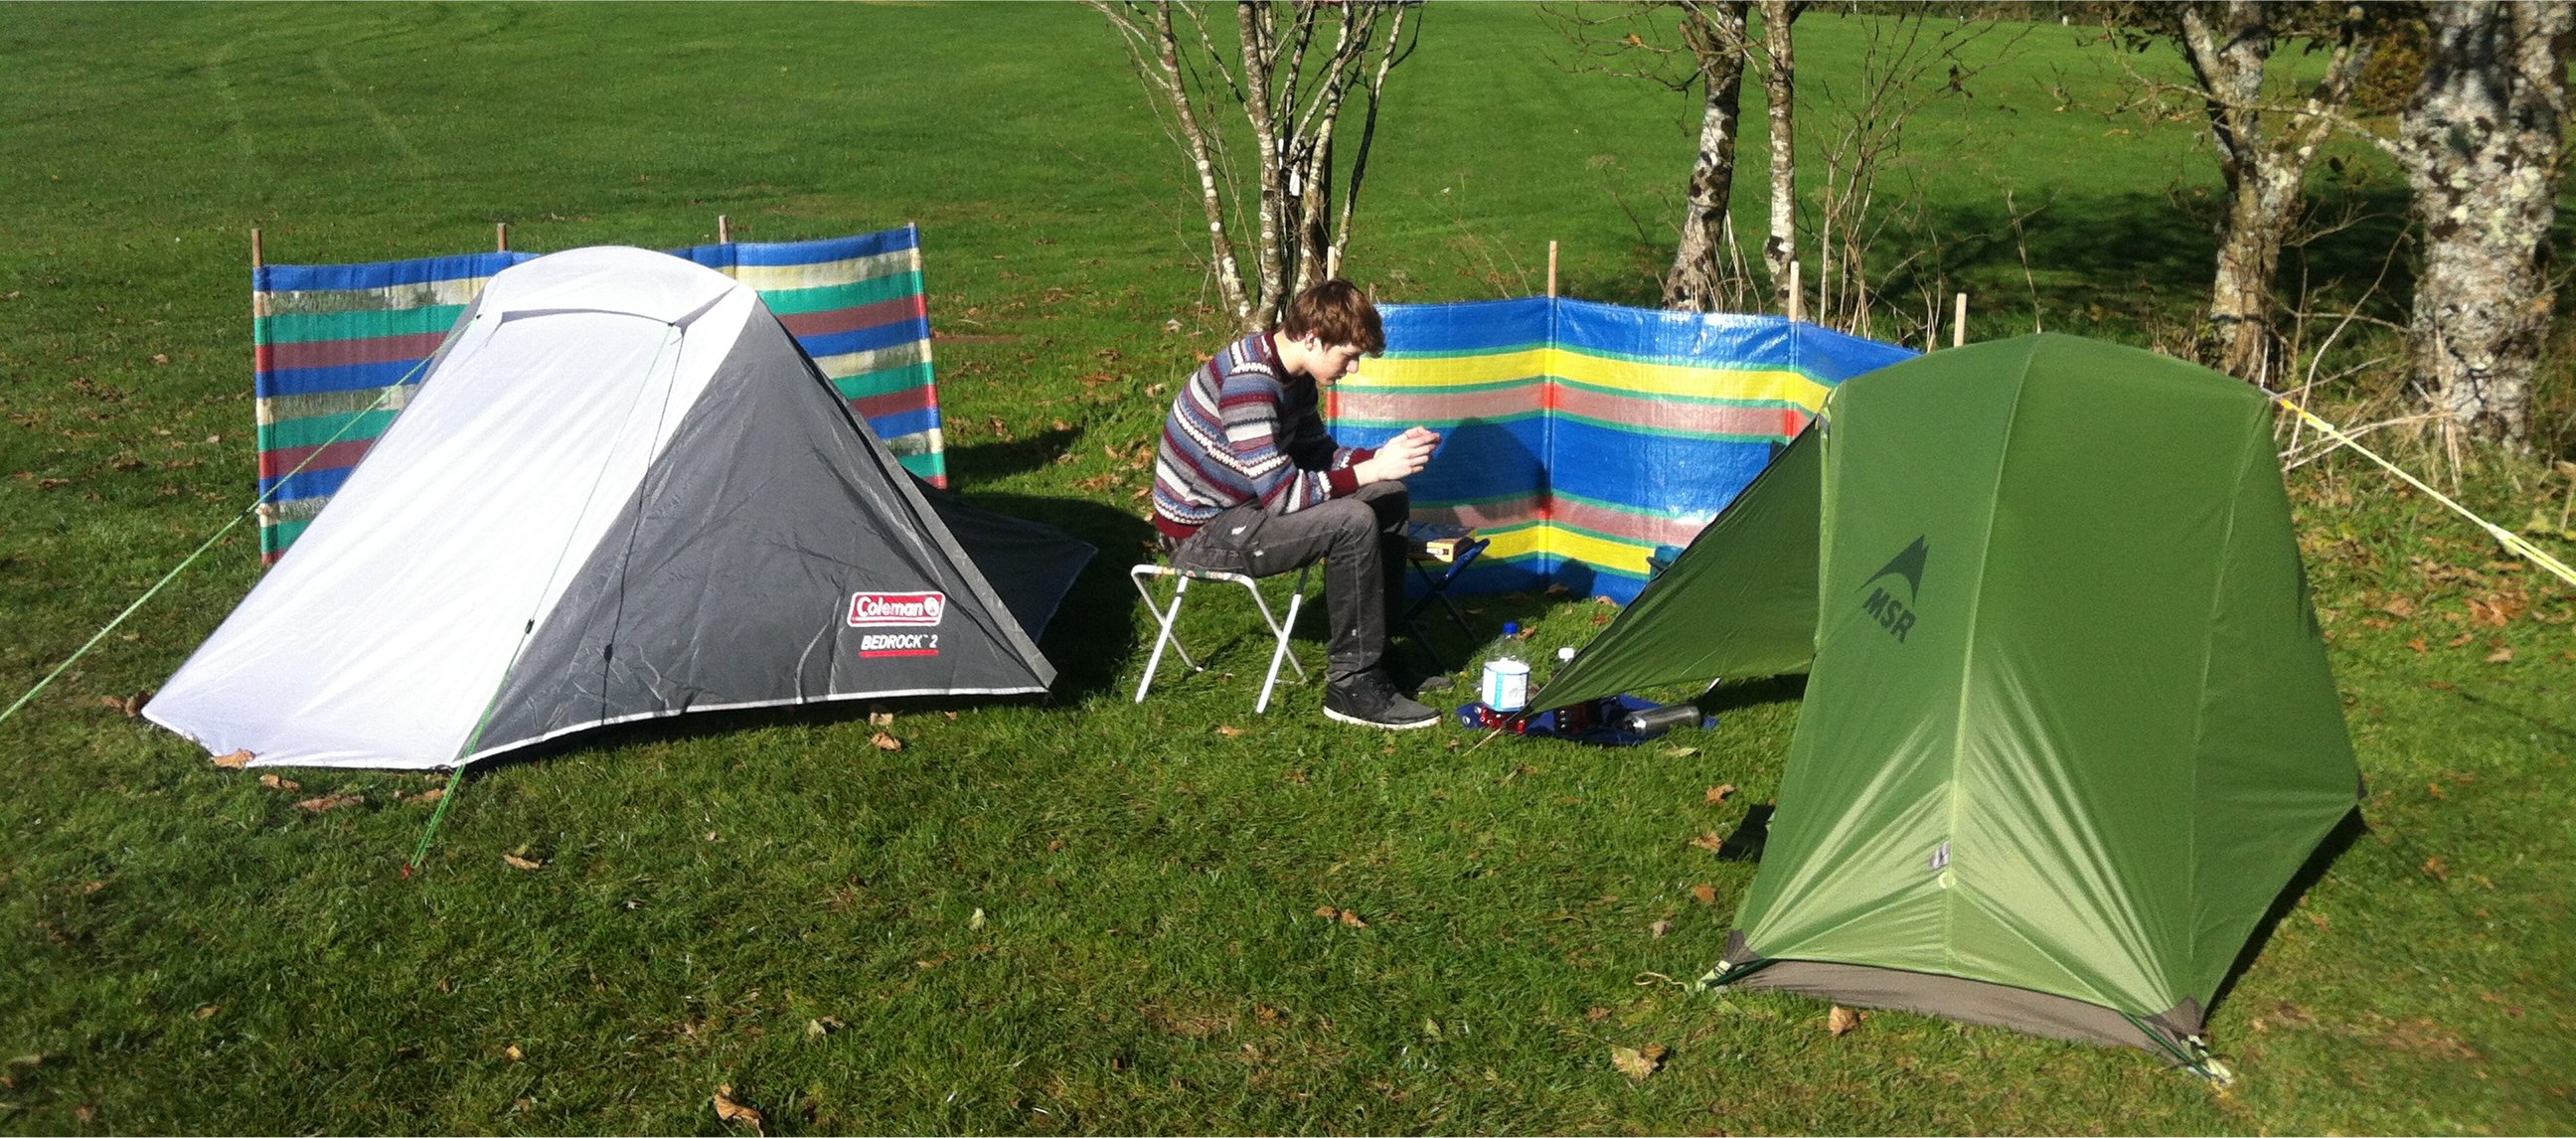 kiespijn Namens Ontvanger MSR Hubba Backpacking Tent tent review and modifications